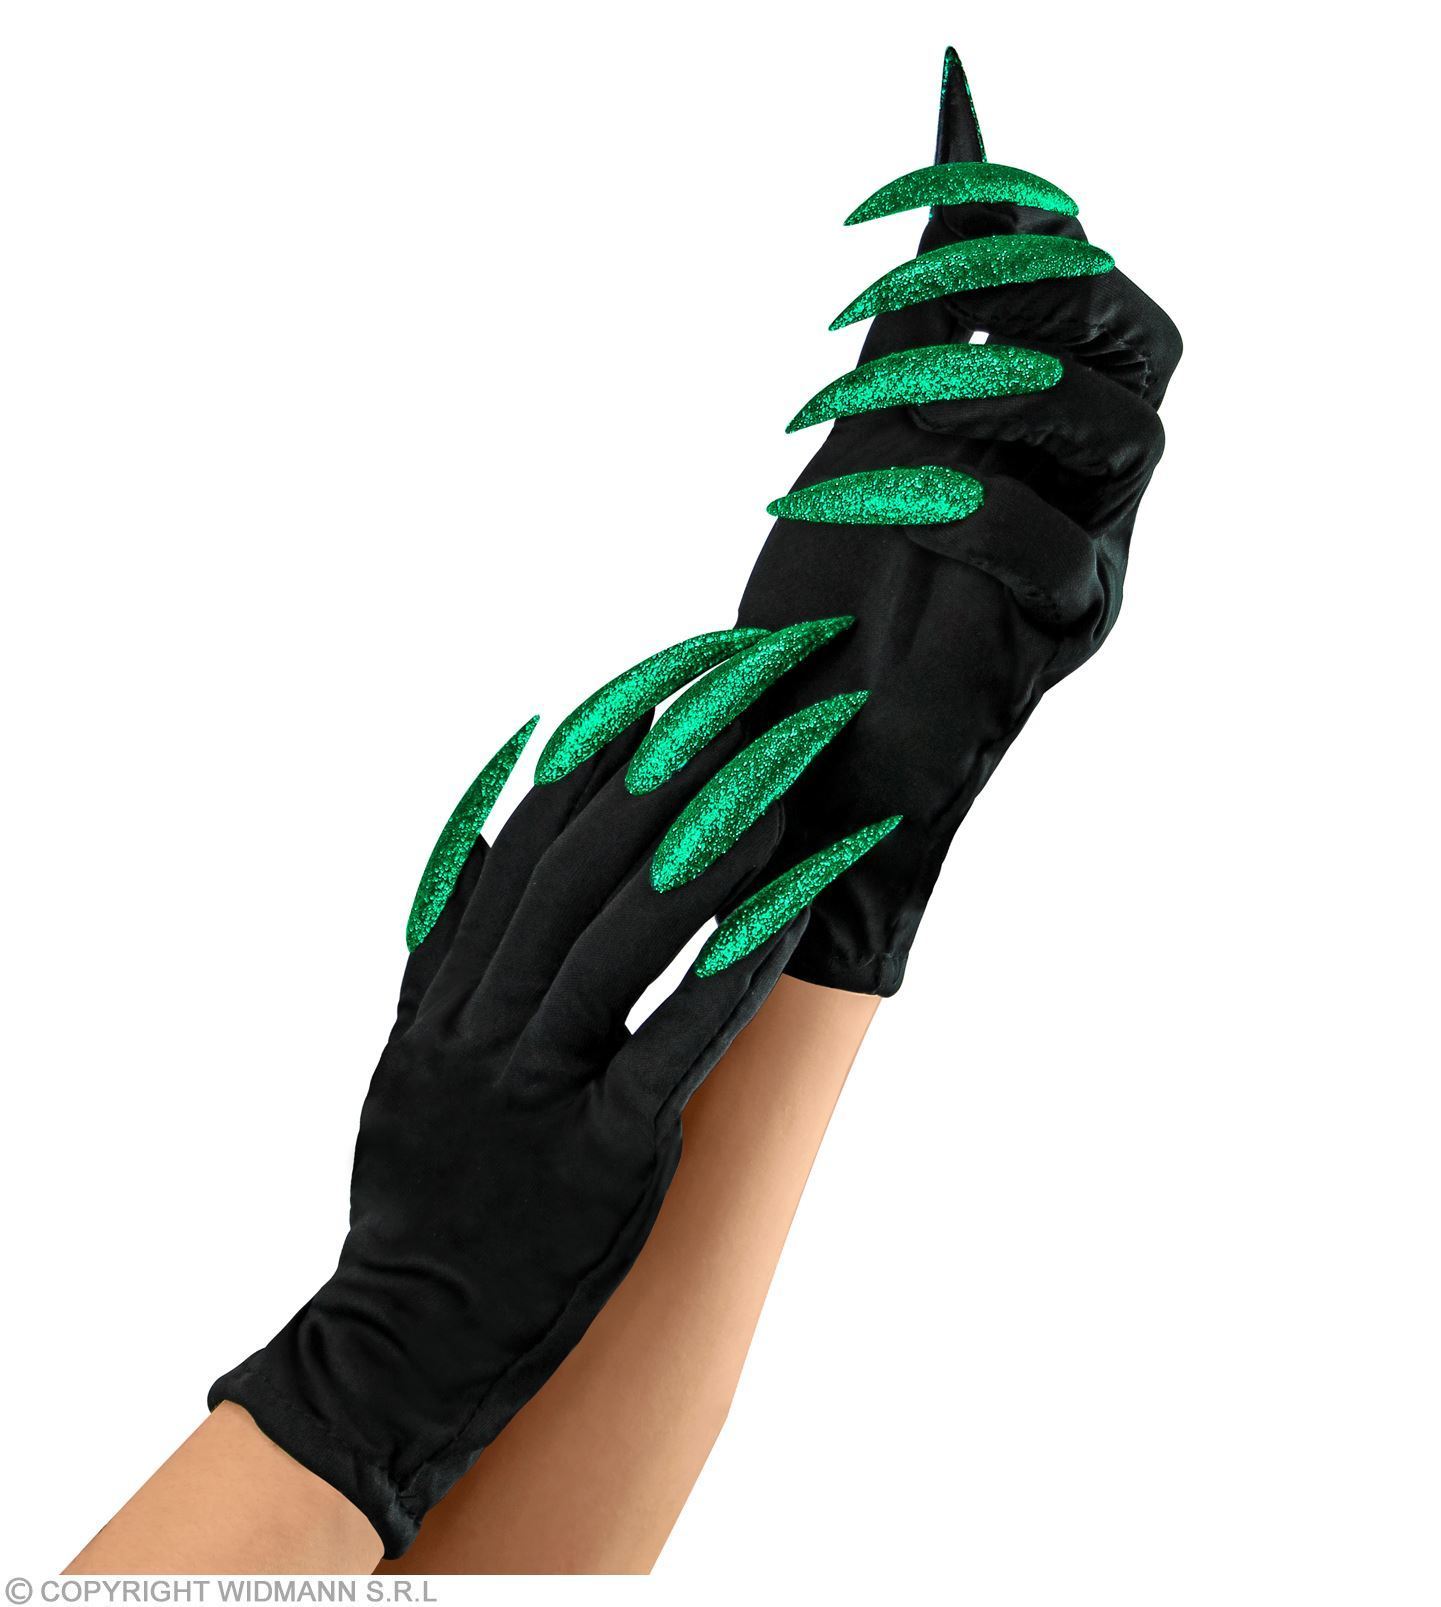 Heksen handschoenen met glitter groene nagels enge heks